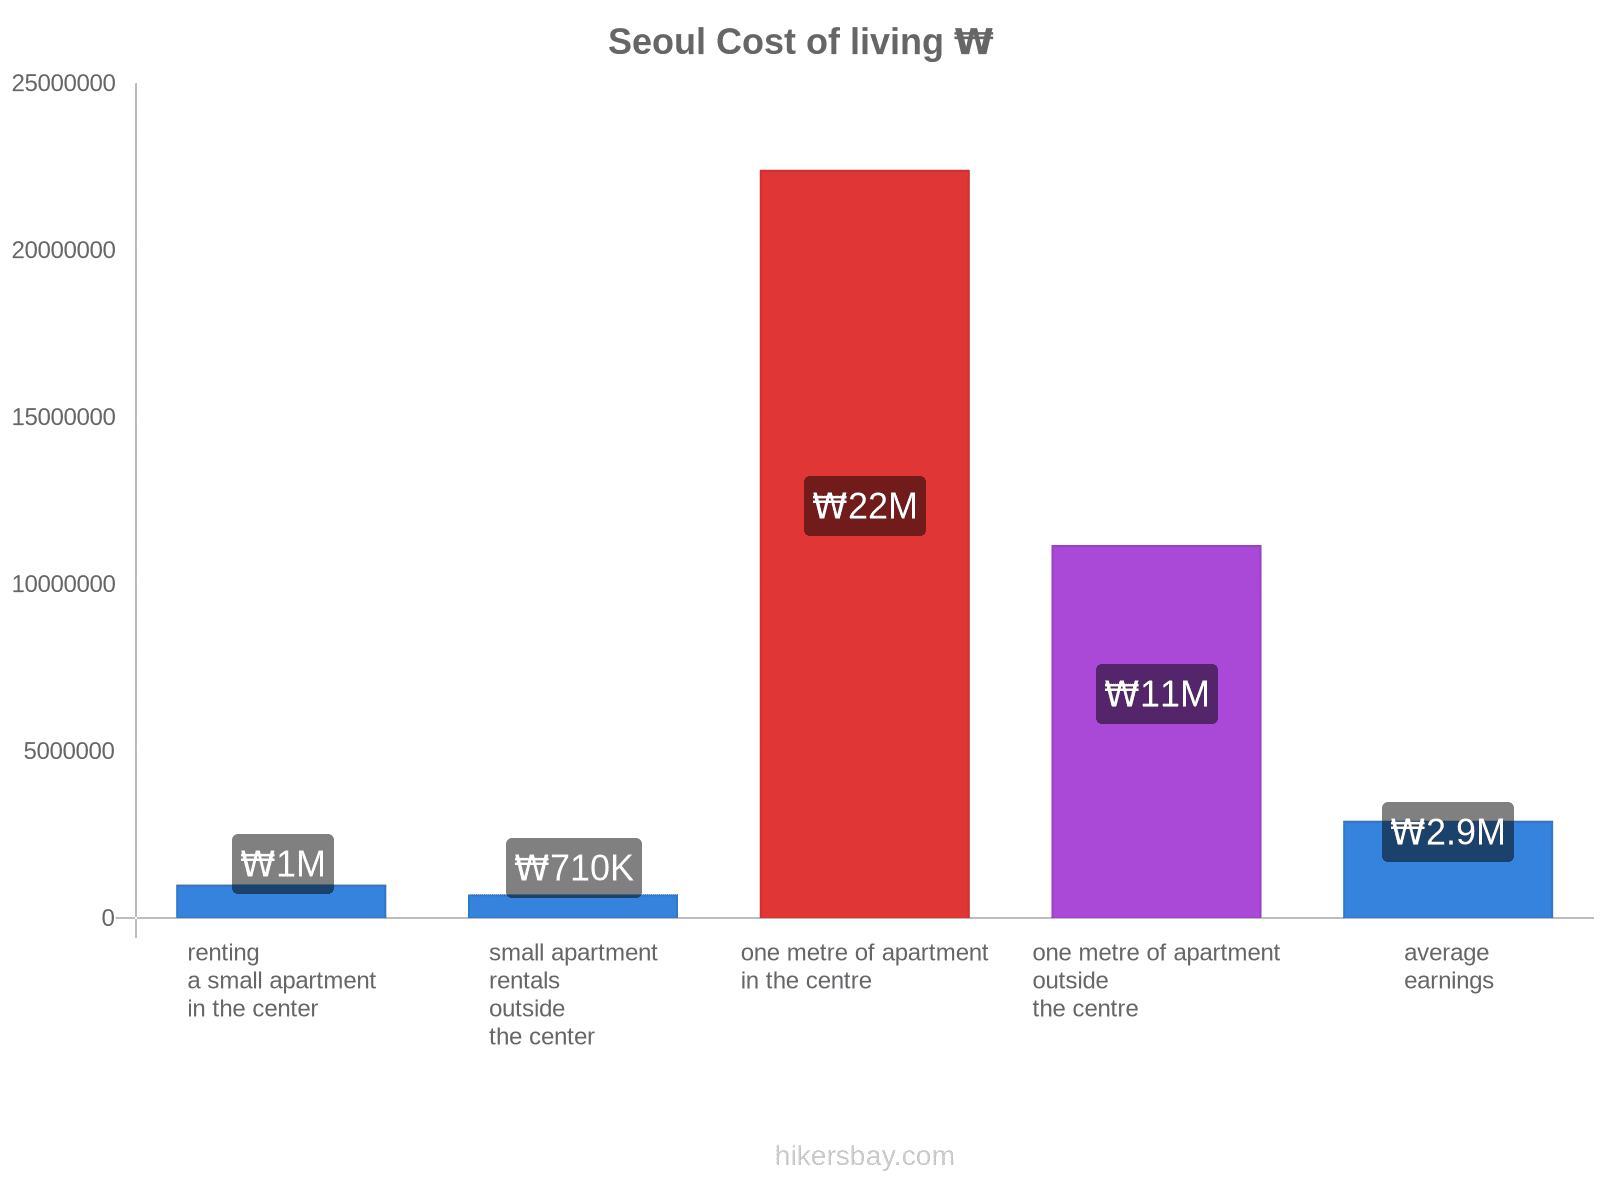 Seoul cost of living hikersbay.com